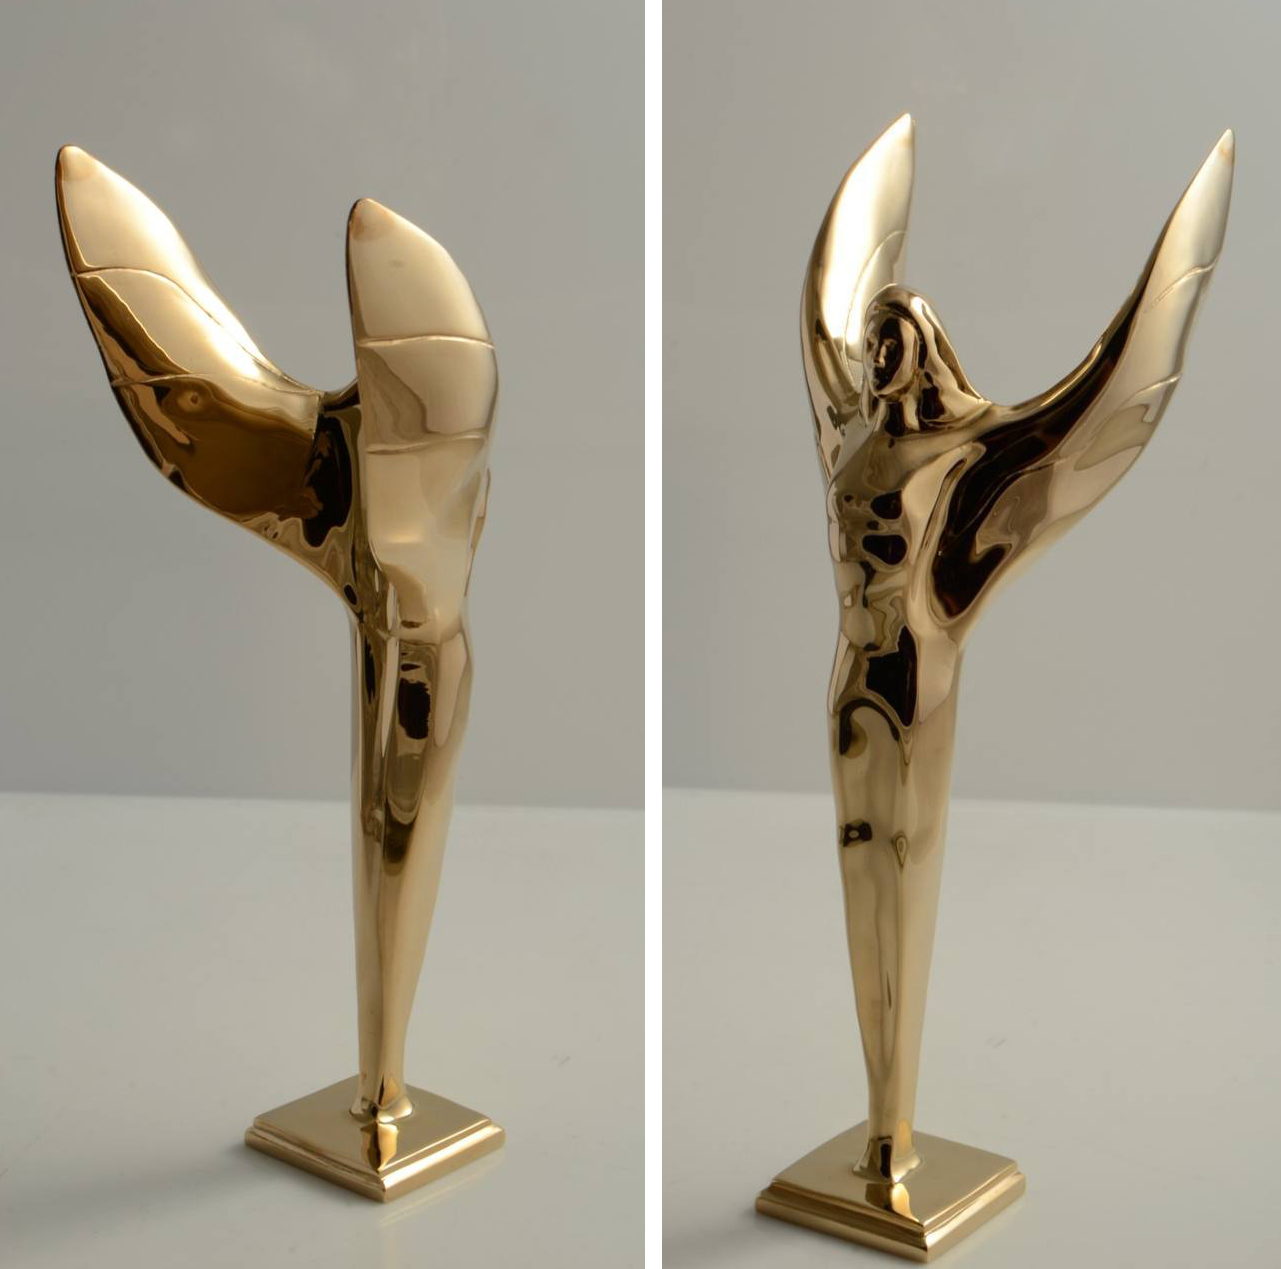 bronze figurines for HR professionals